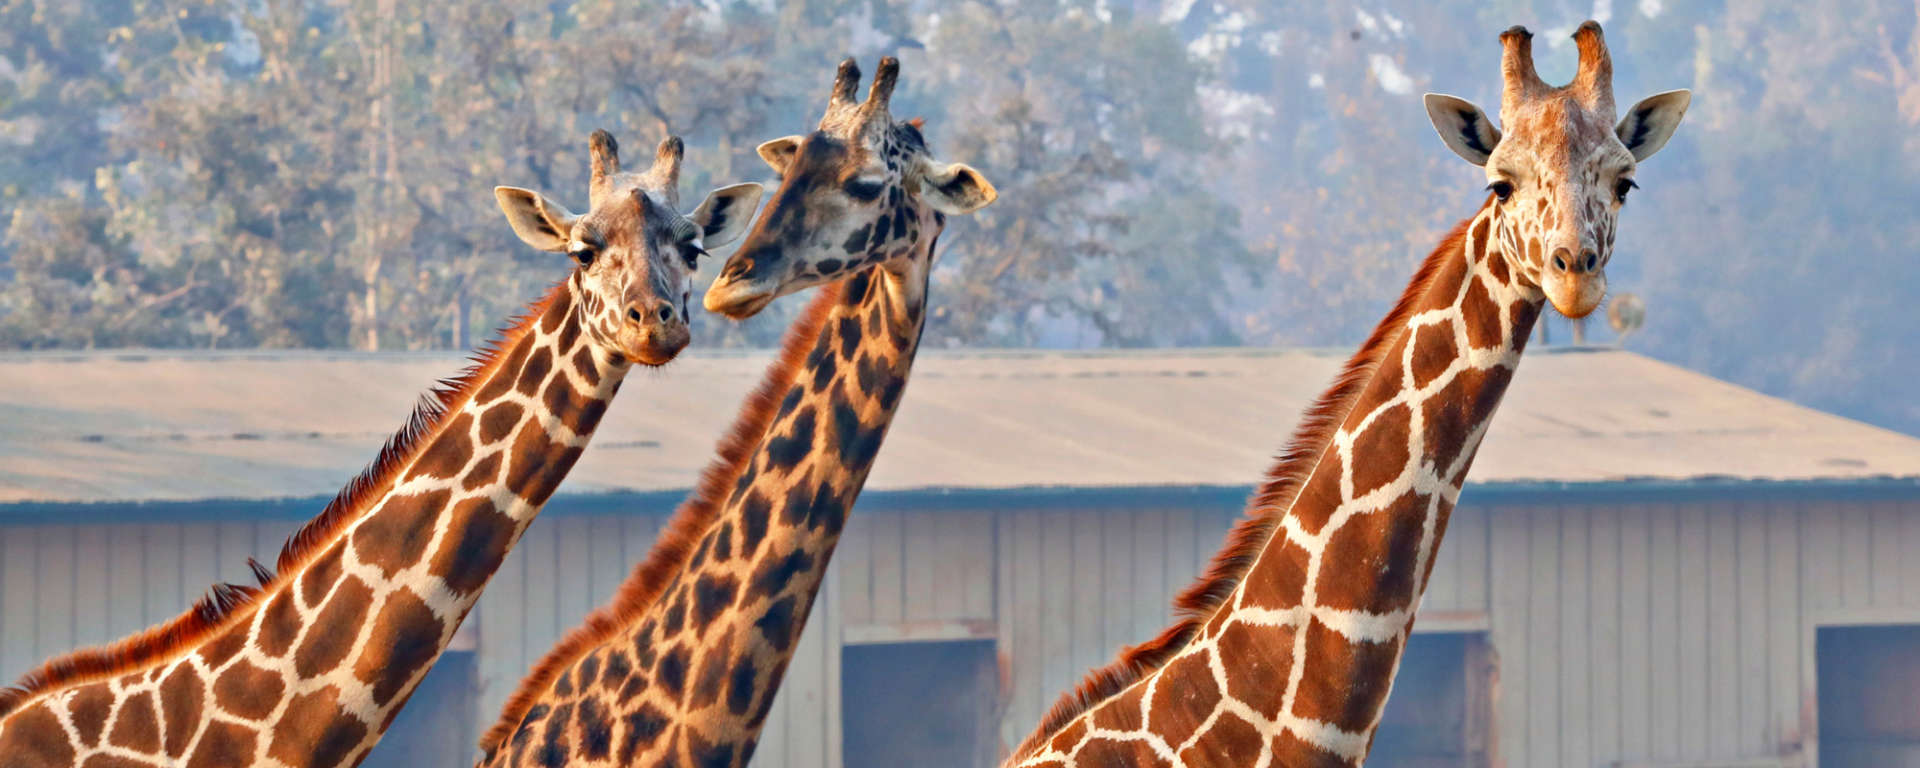 Giraffes by Will Bucquoy